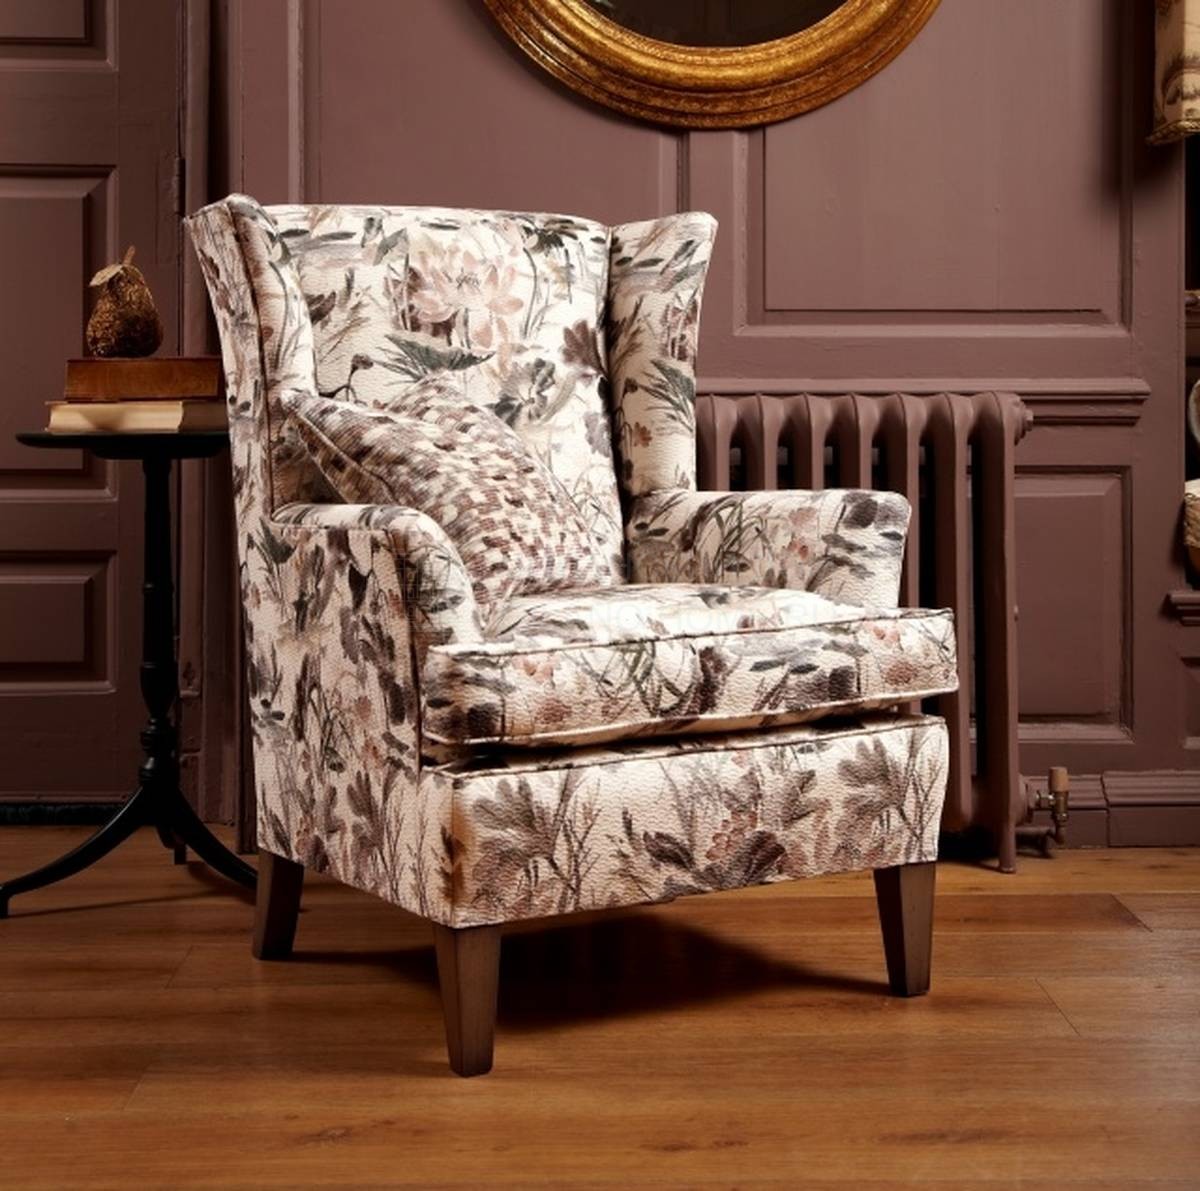 Кресло Beresford armchair из Великобритании фабрики DURESTA